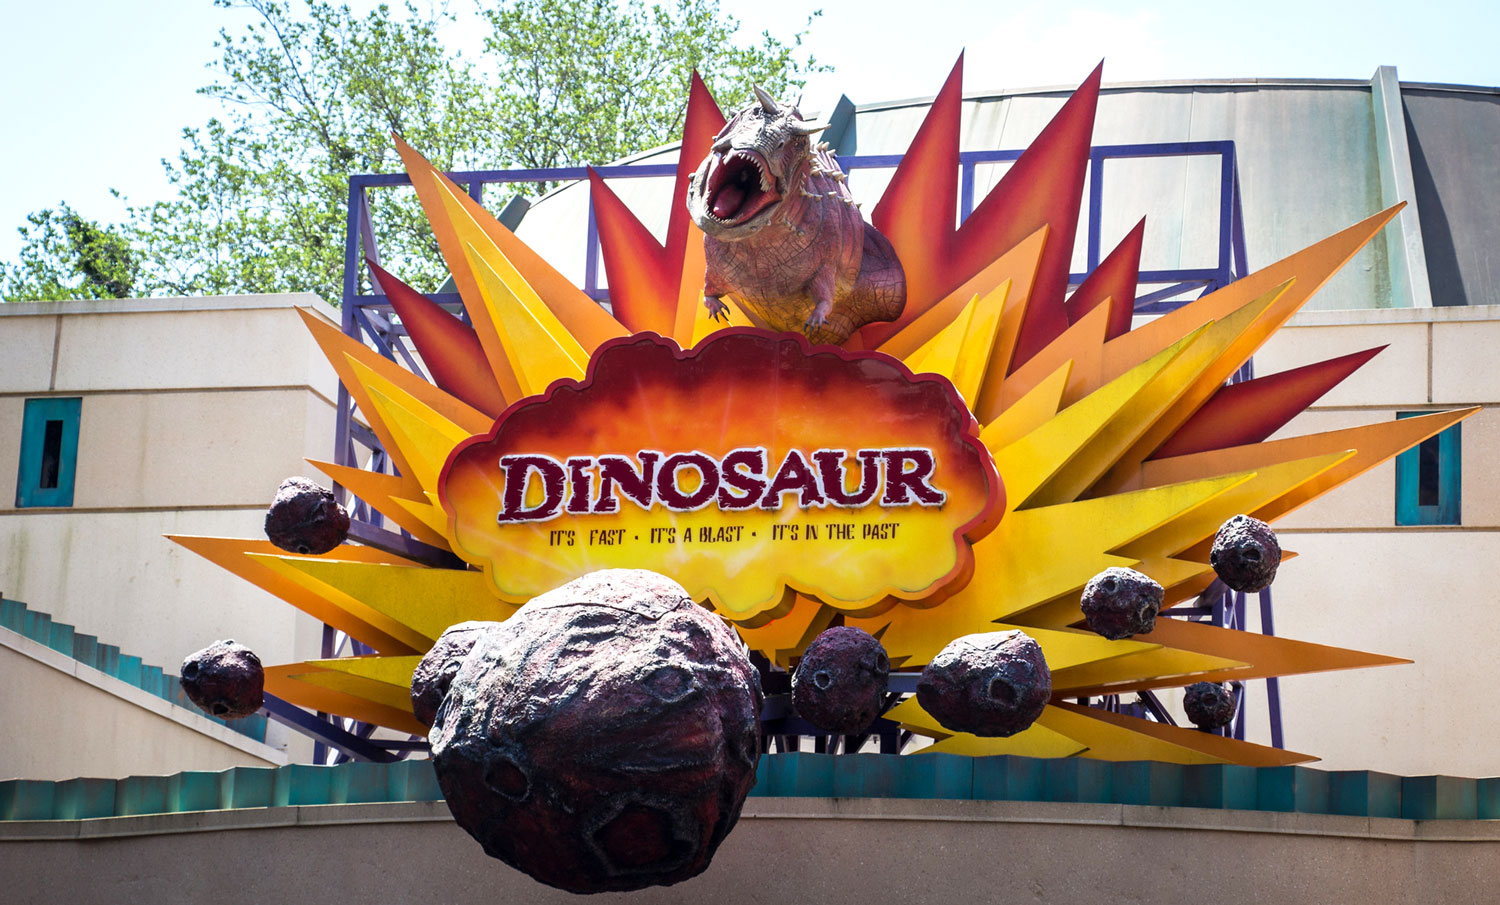 DINOSAUR Overview | Disney's Animal Kingdom Attractions - DVC Shop